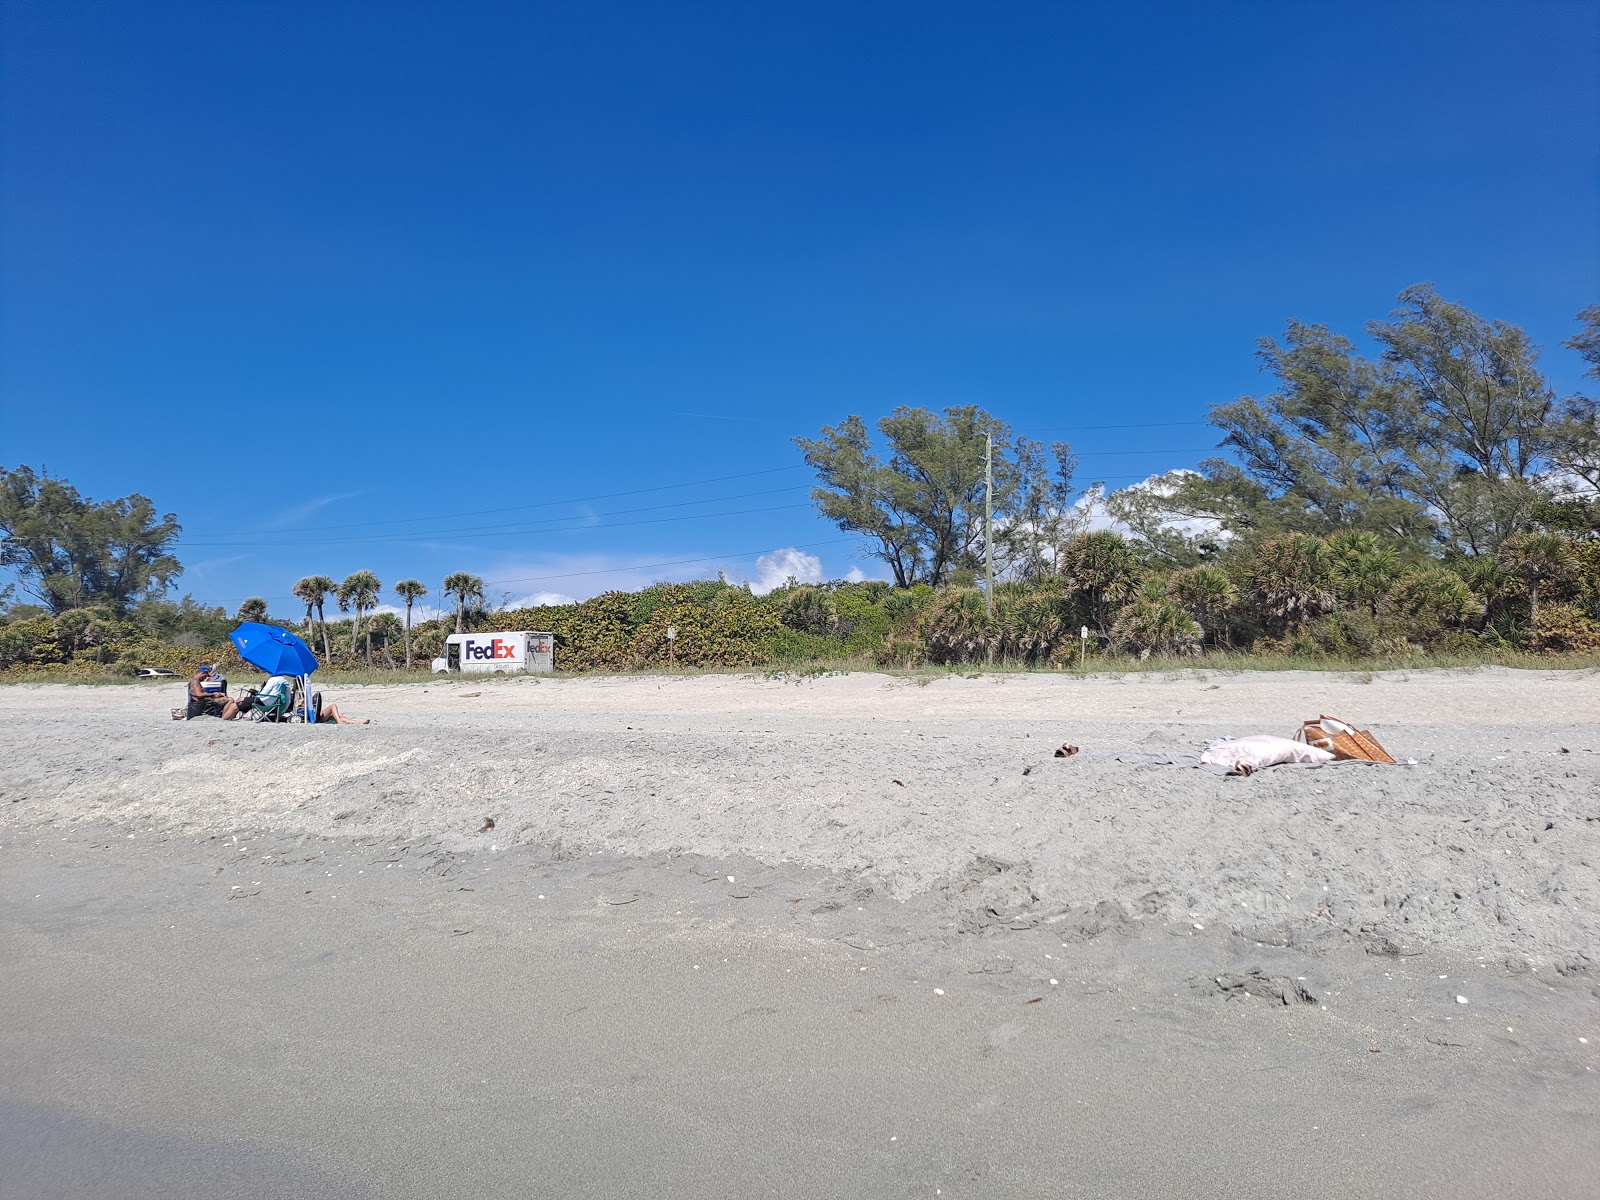 Foto de Blind Pass beach - lugar popular entre os apreciadores de relaxamento